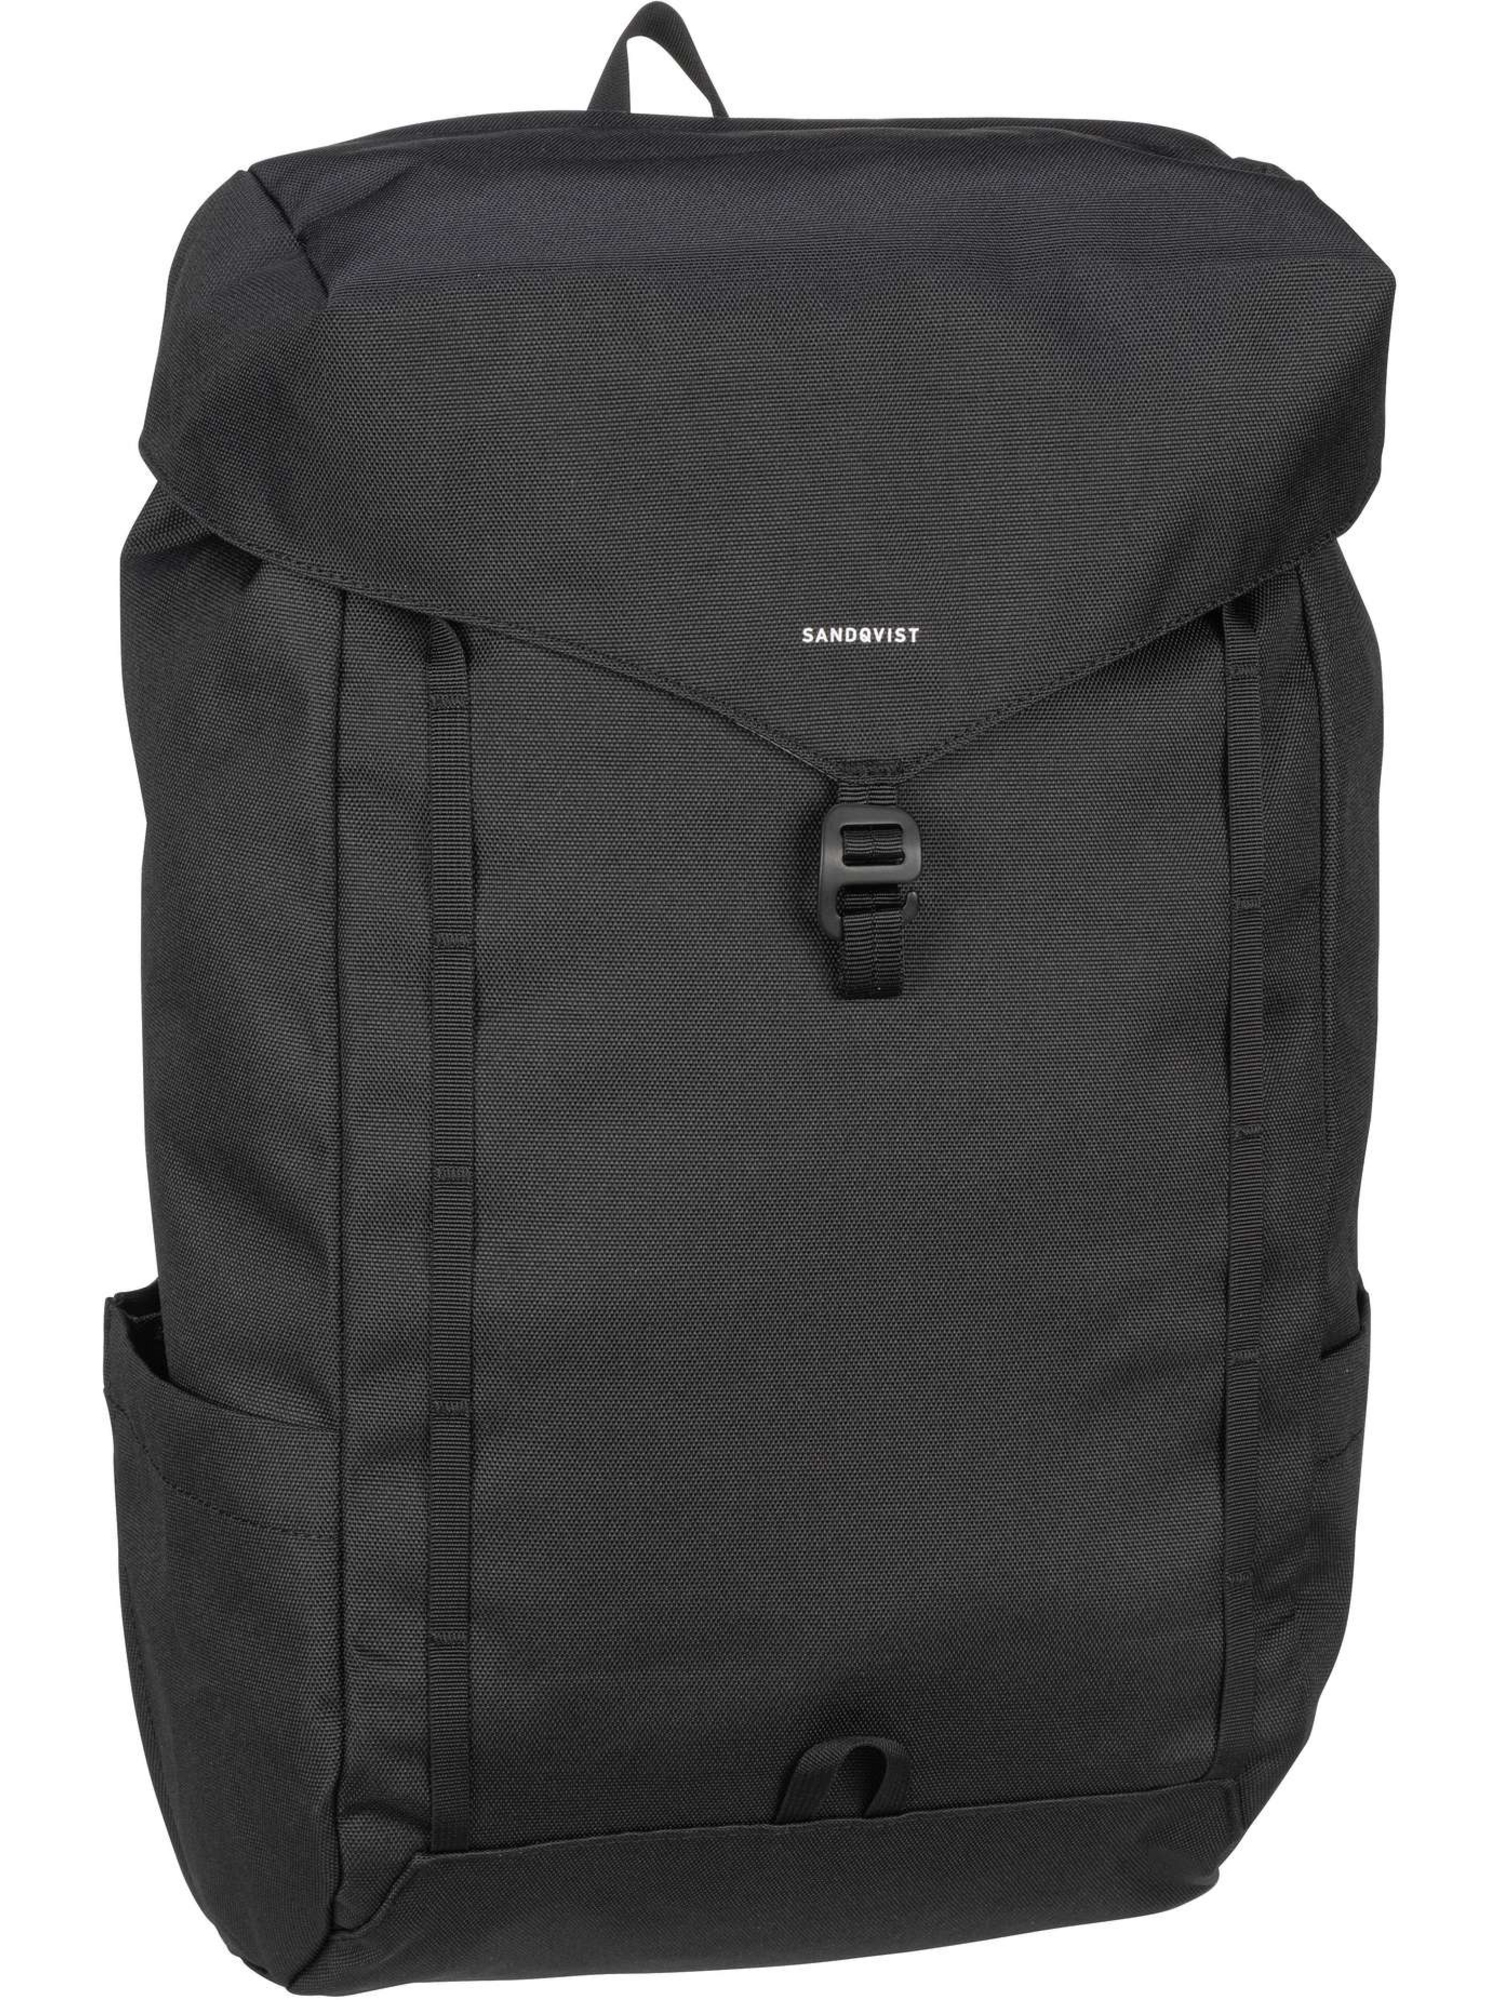 Рюкзак SANDQVIST/Backpack Walter Backpack, черный